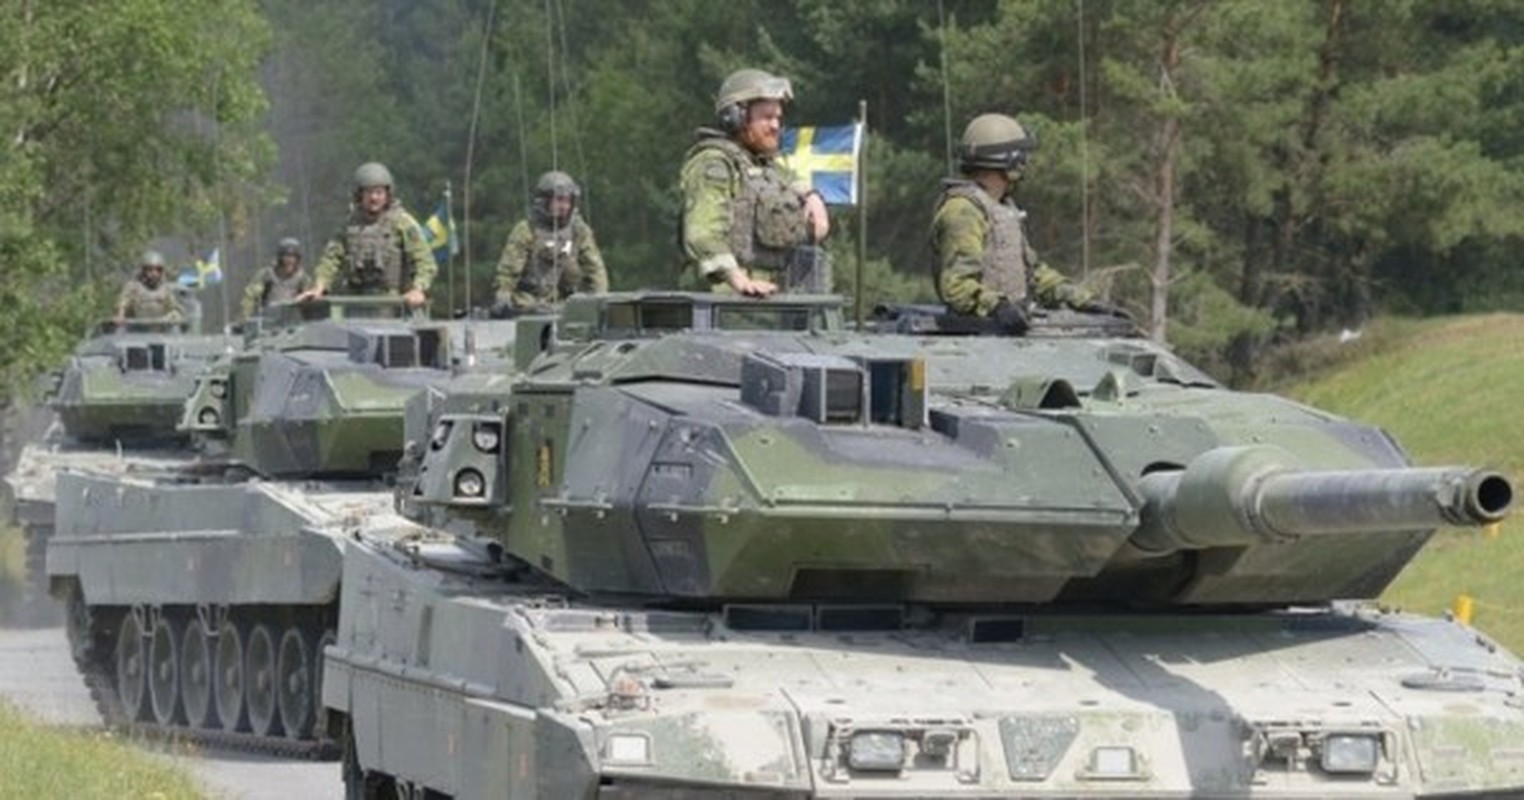 Xe tang Strv 122 vua bi pha huy tai Ukraine manh toi dau?